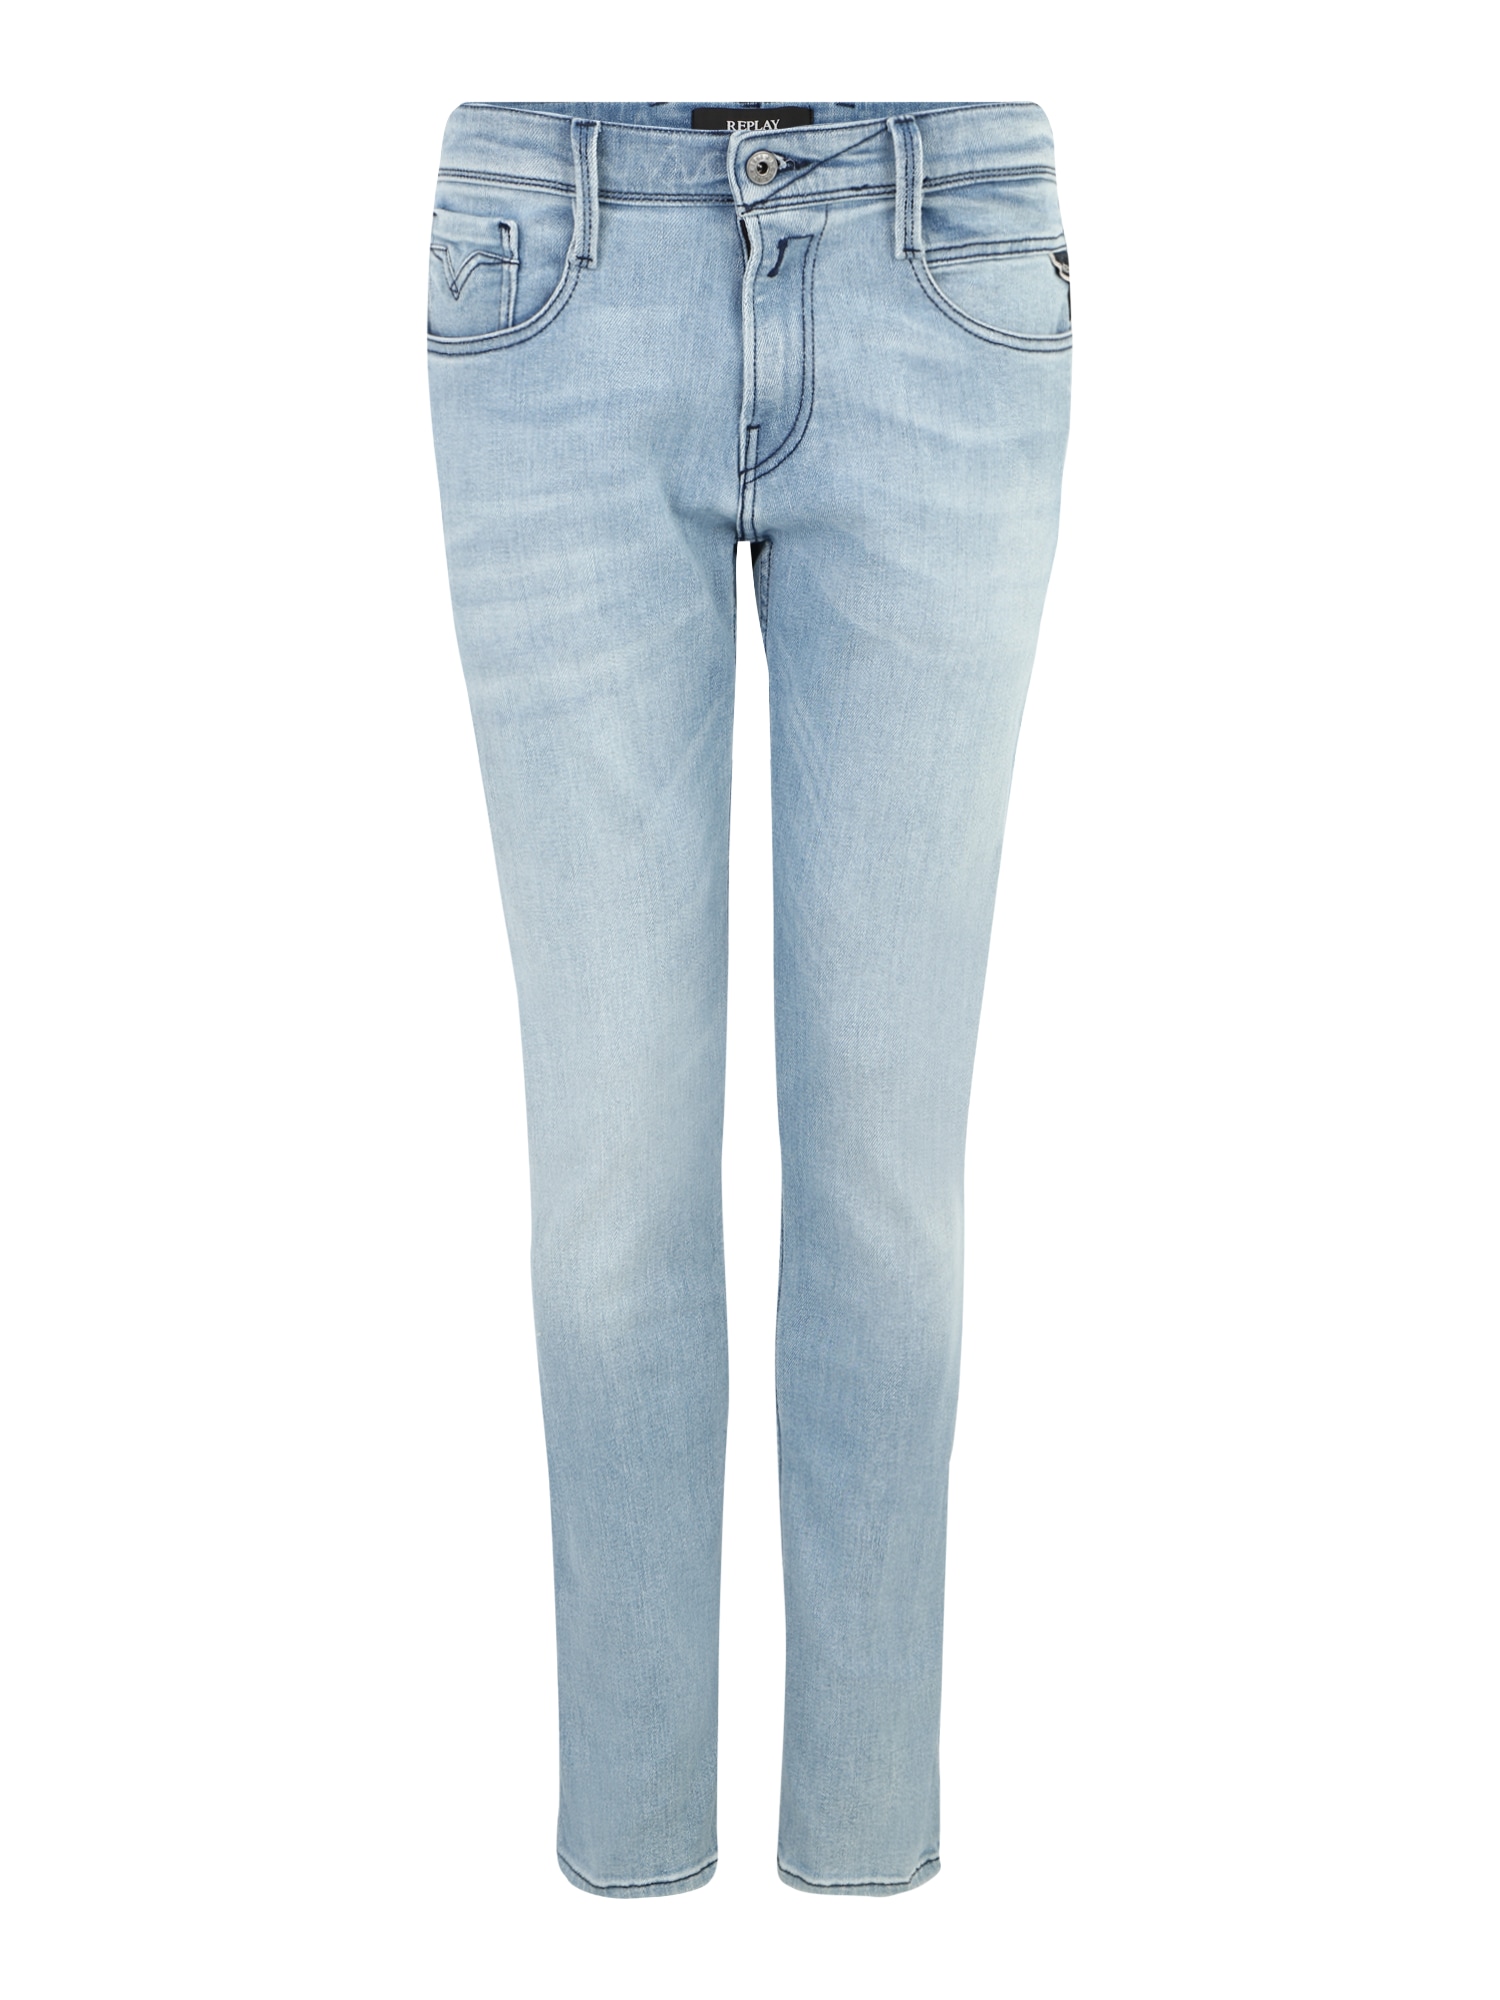 Replay REPLAY Jeans 'ANBASS' hellblau